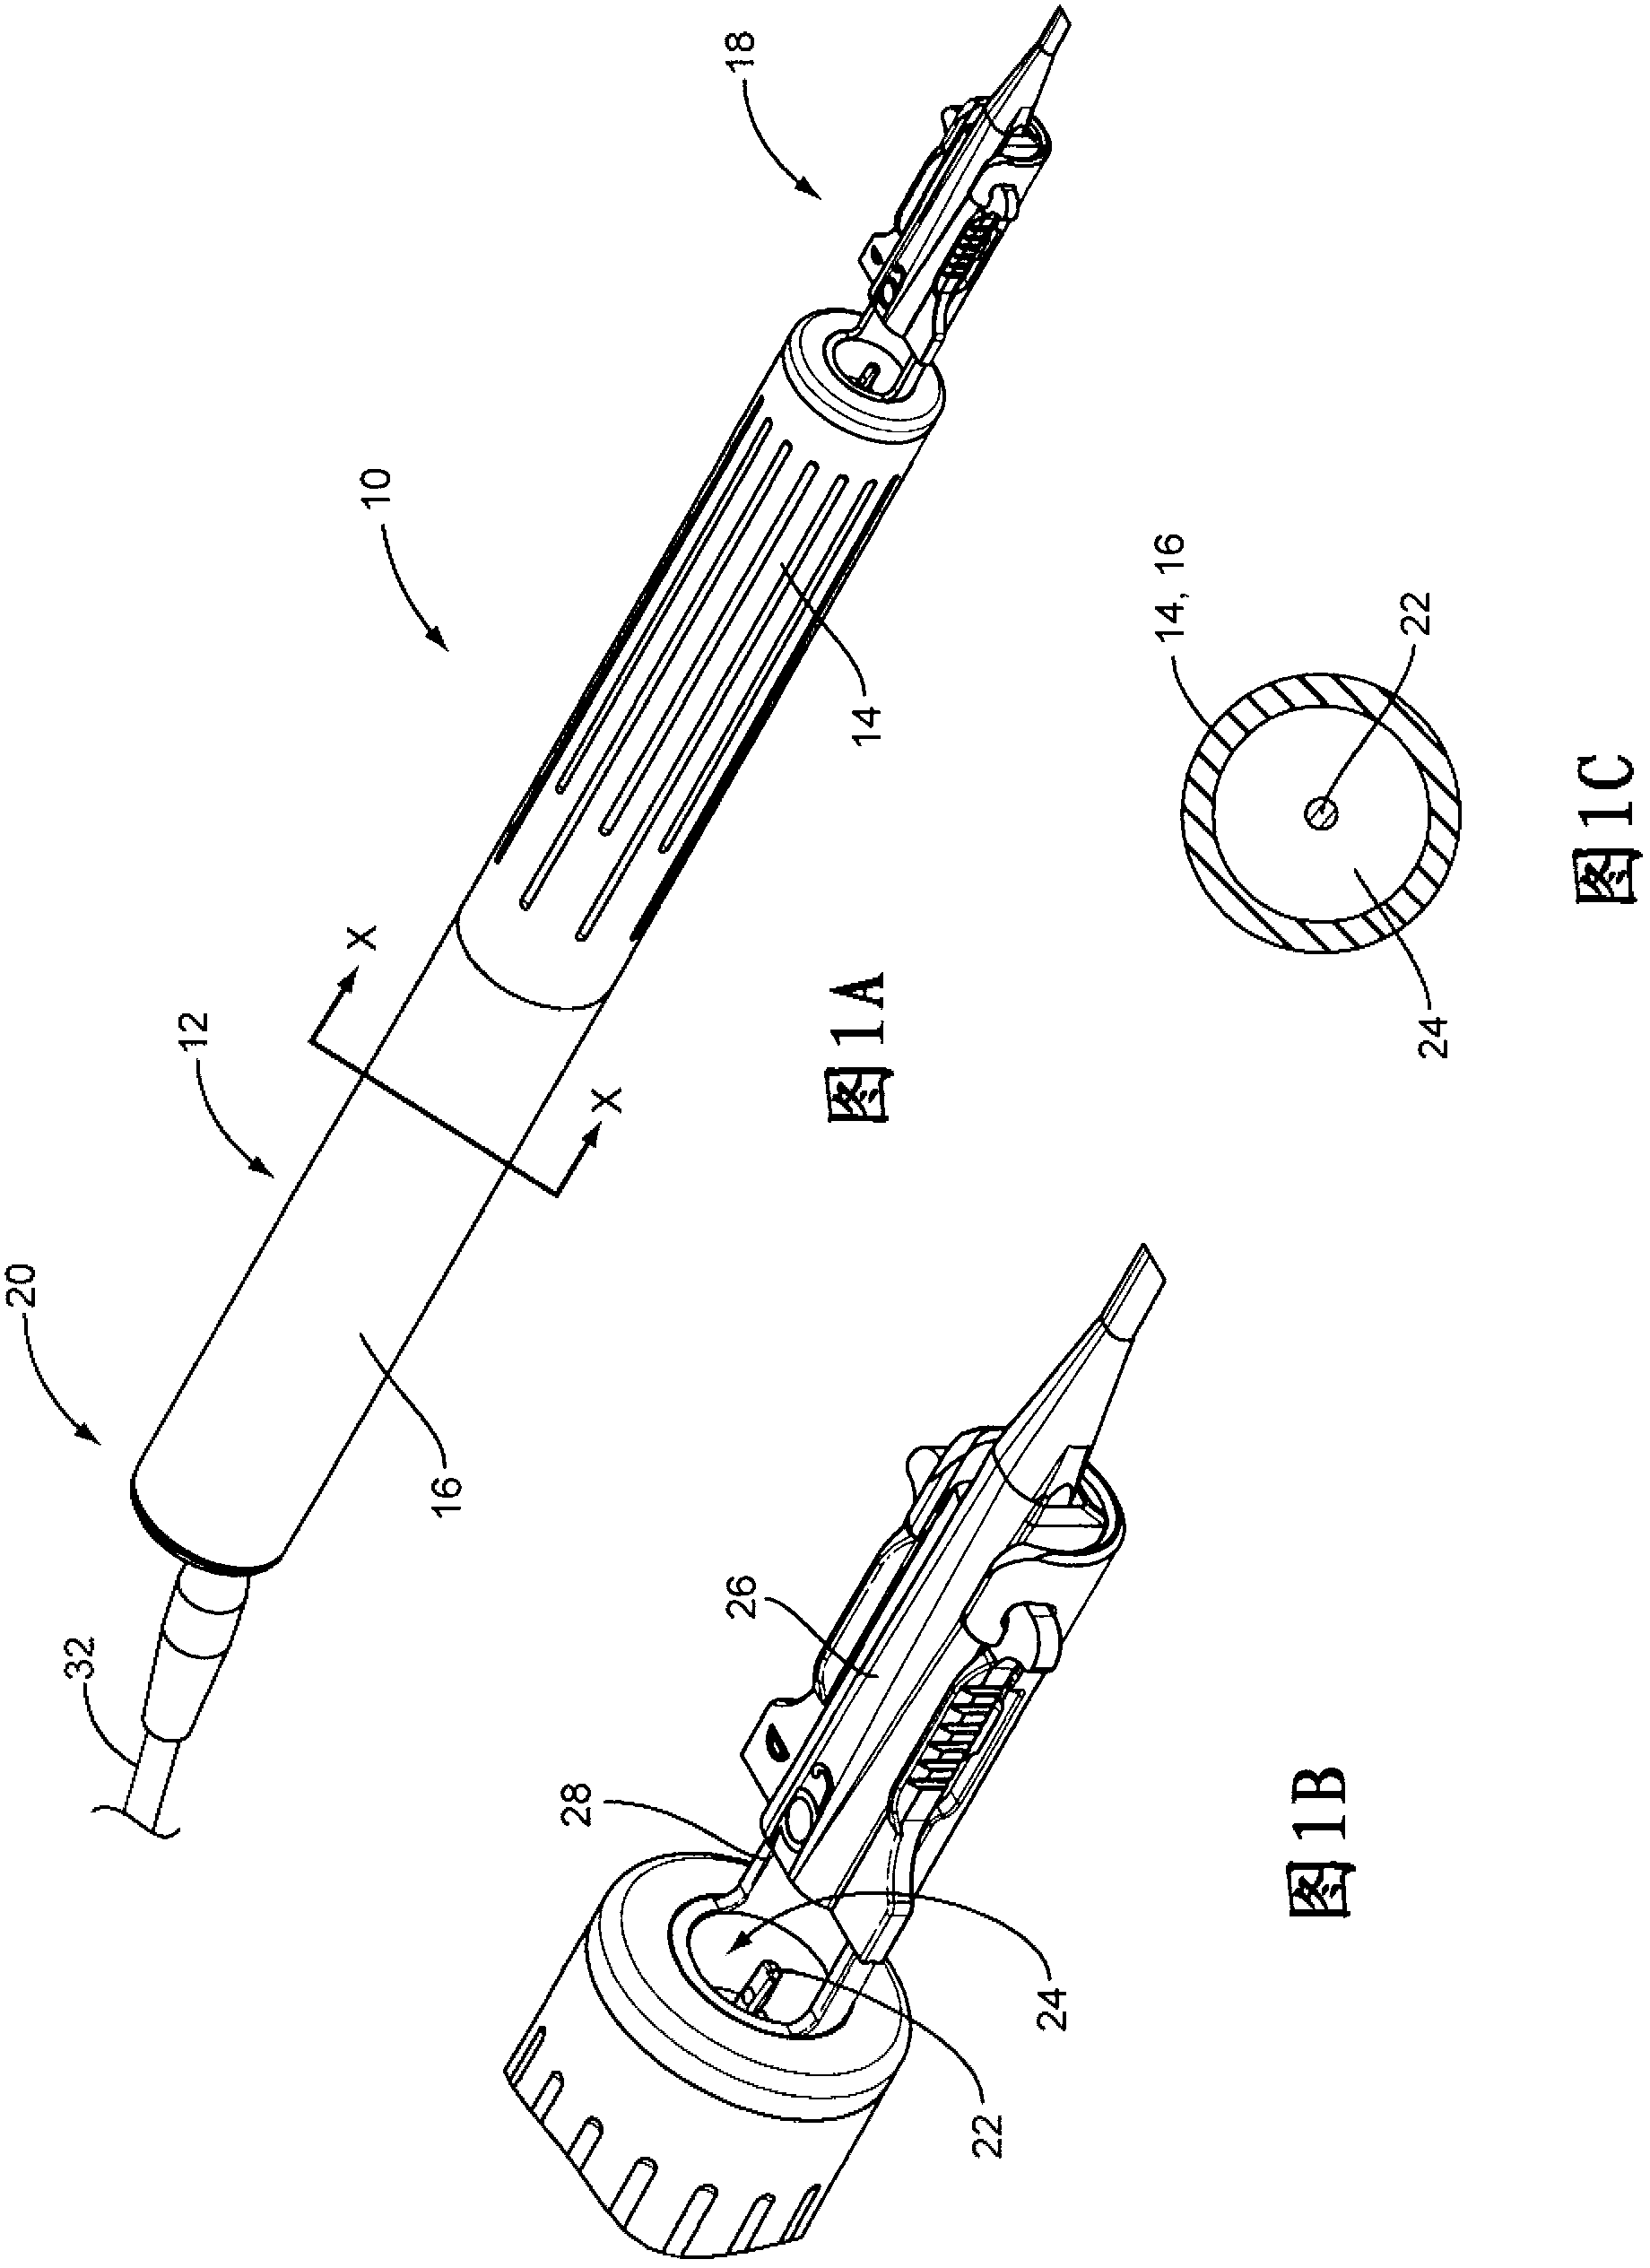 Modular intraocular lens injector device